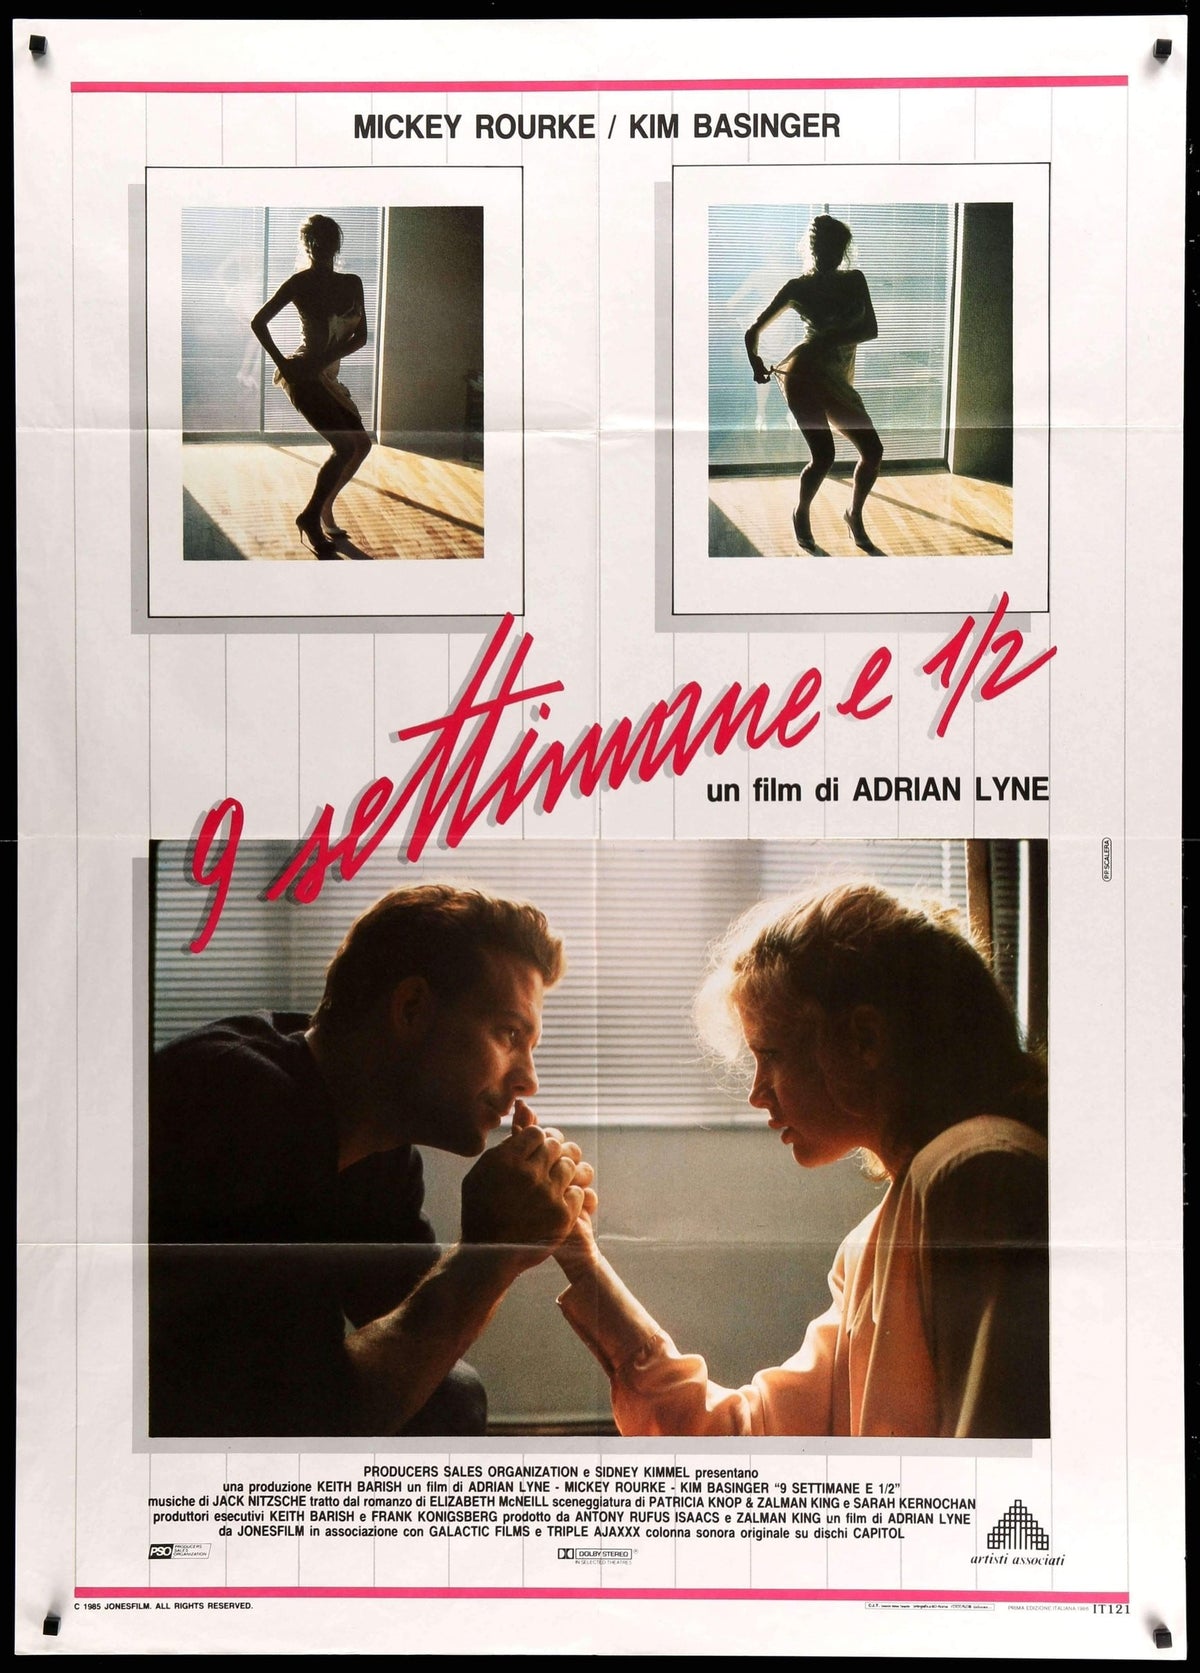 9 1/2 Weeks (1986) original movie poster for sale at Original Film Art